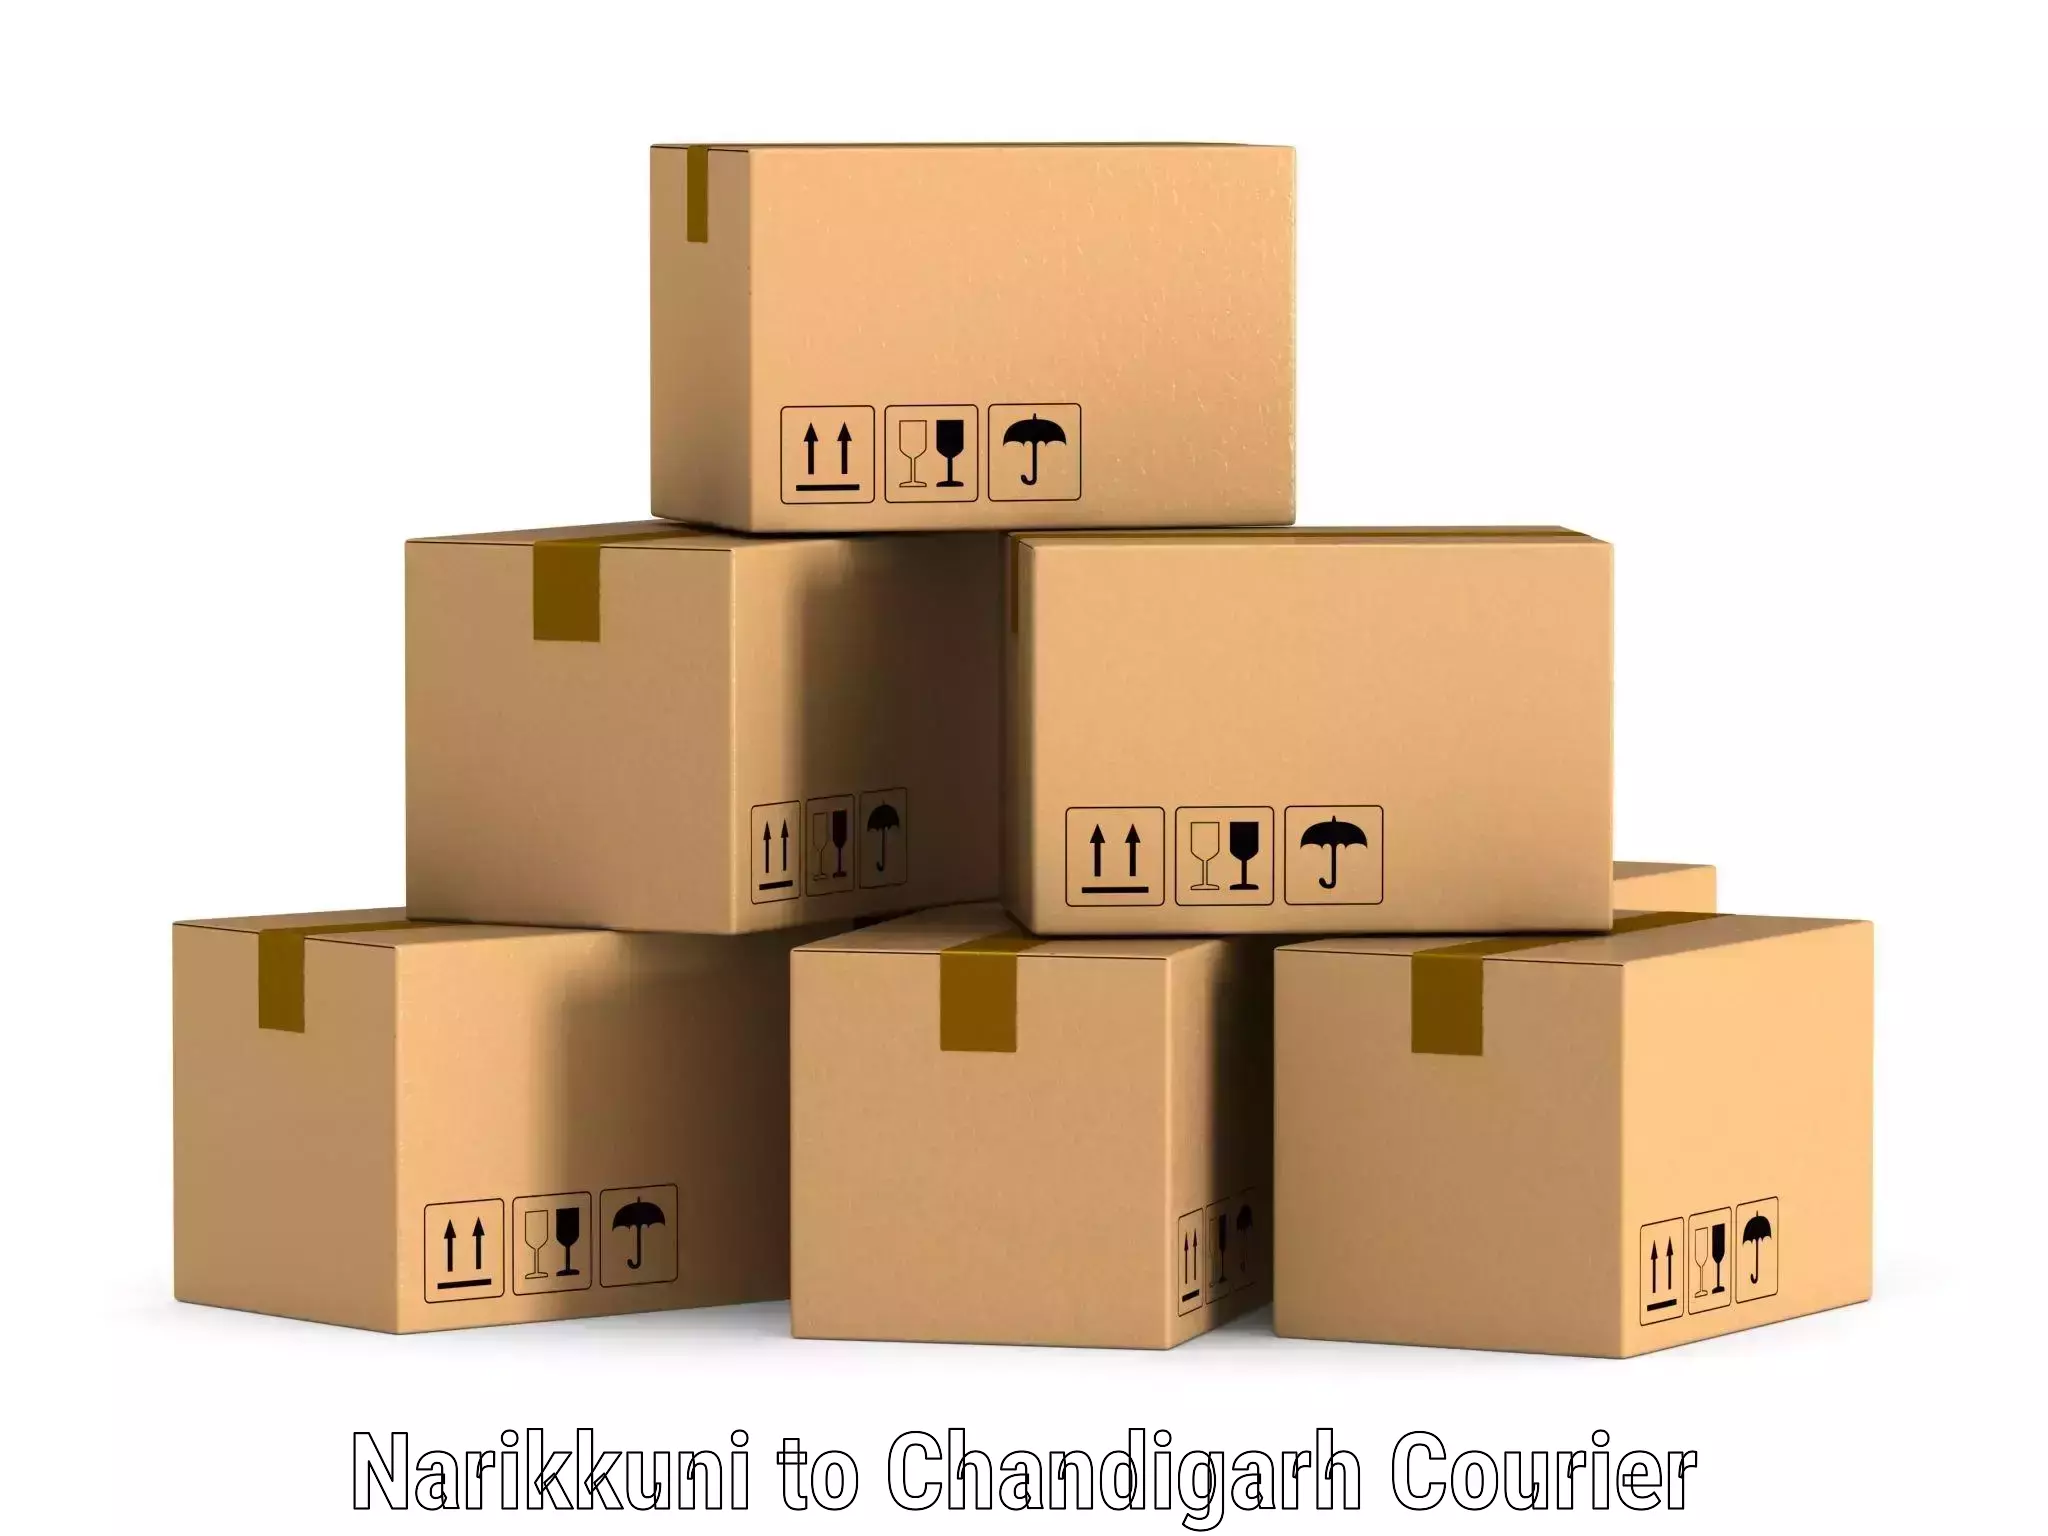 Cargo delivery service Narikkuni to Chandigarh